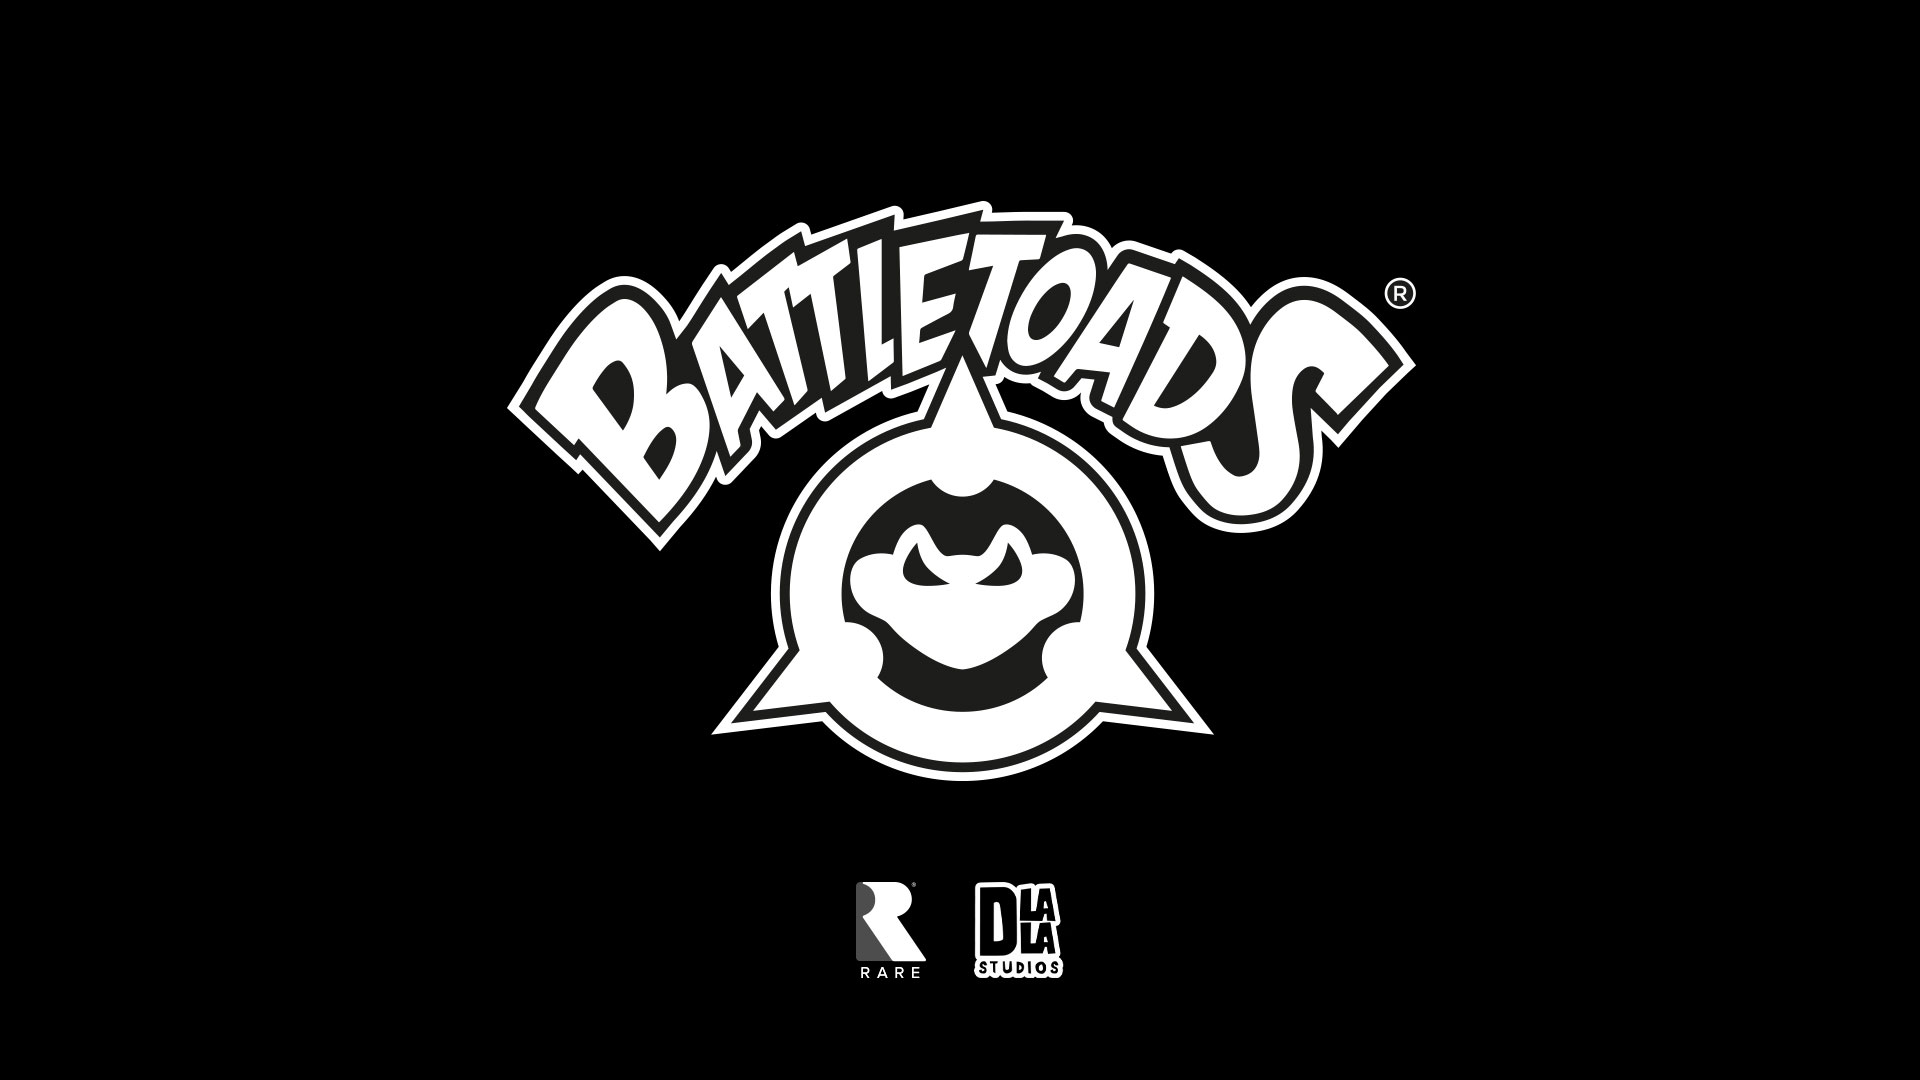 download battletoads xbox one